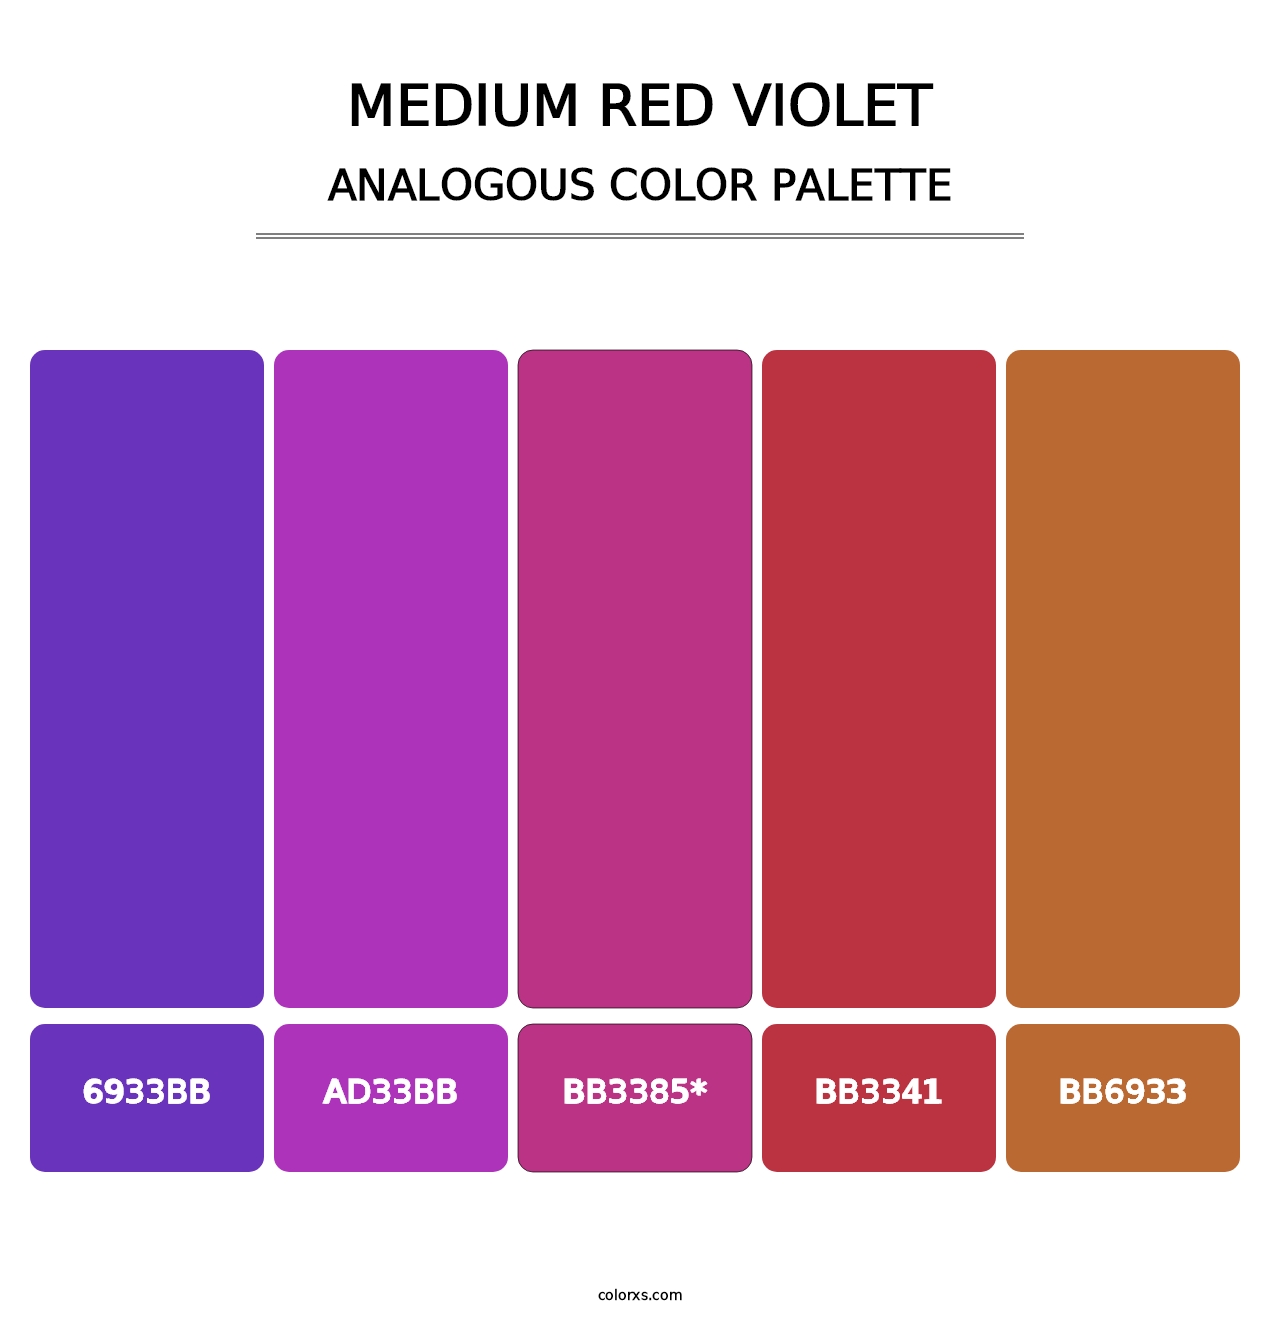 Medium Red Violet - Analogous Color Palette